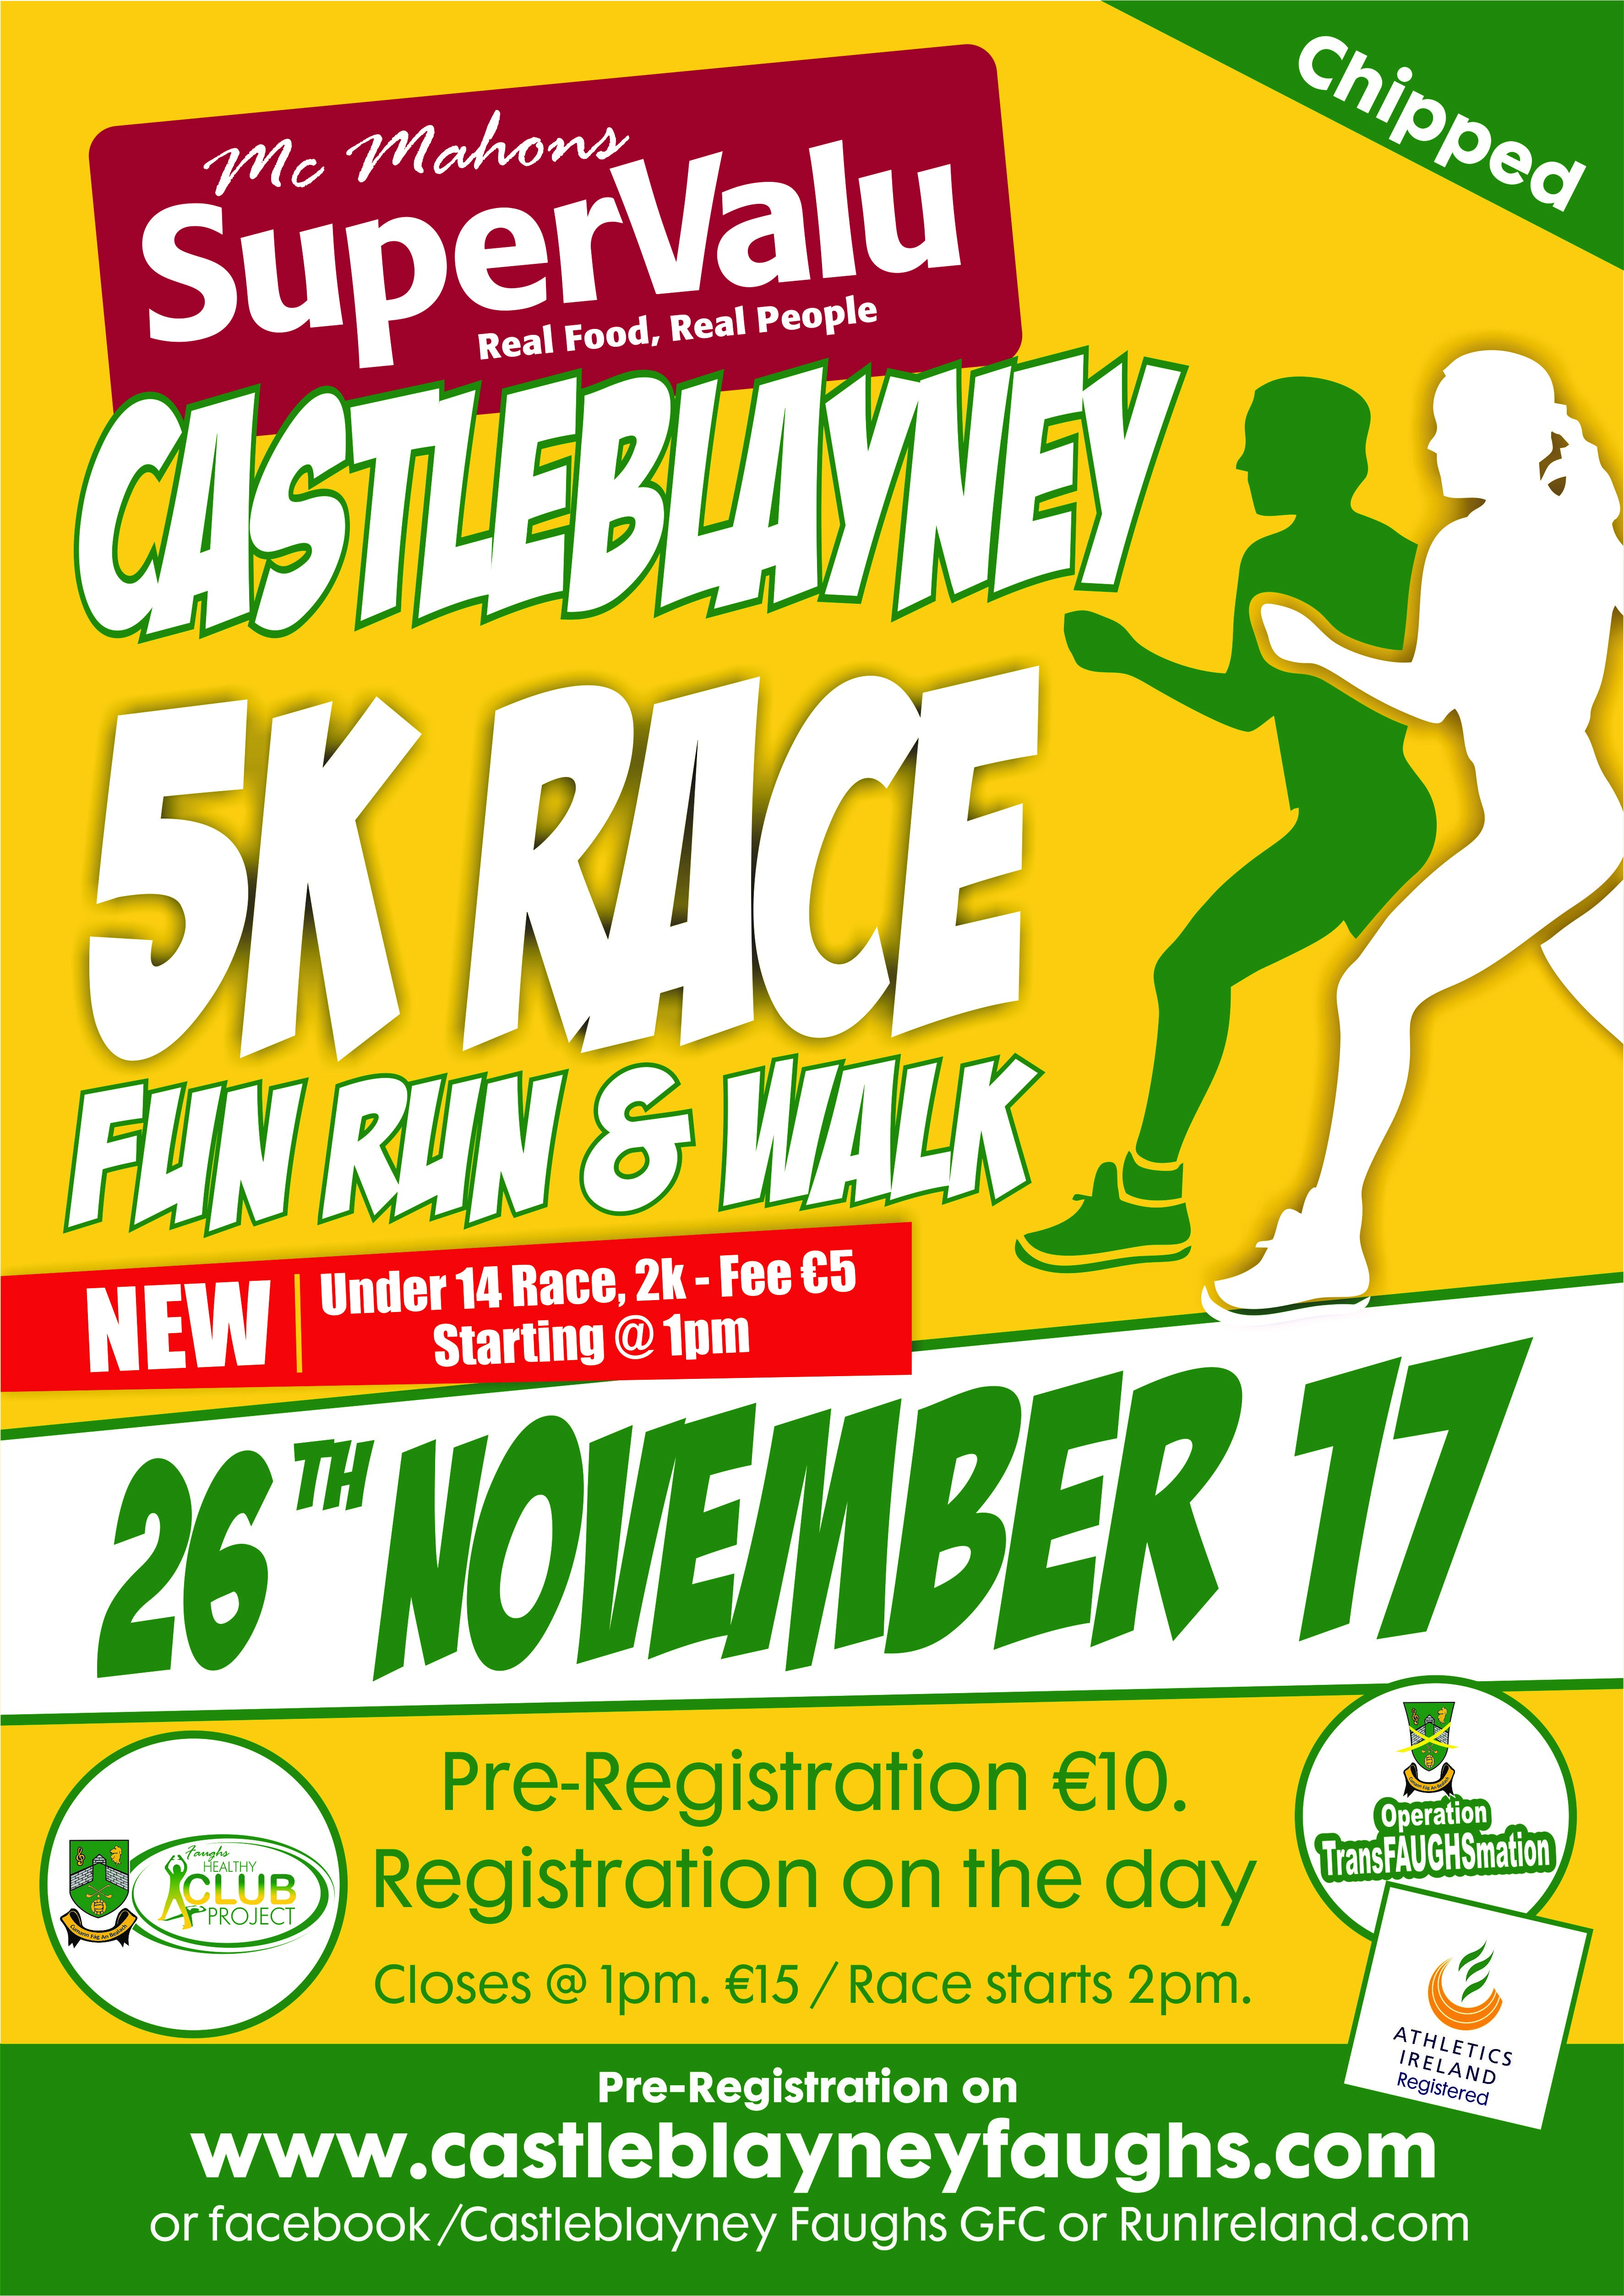 Supervalu Castleblayney 5K ready for the off this Sunday 26th of November